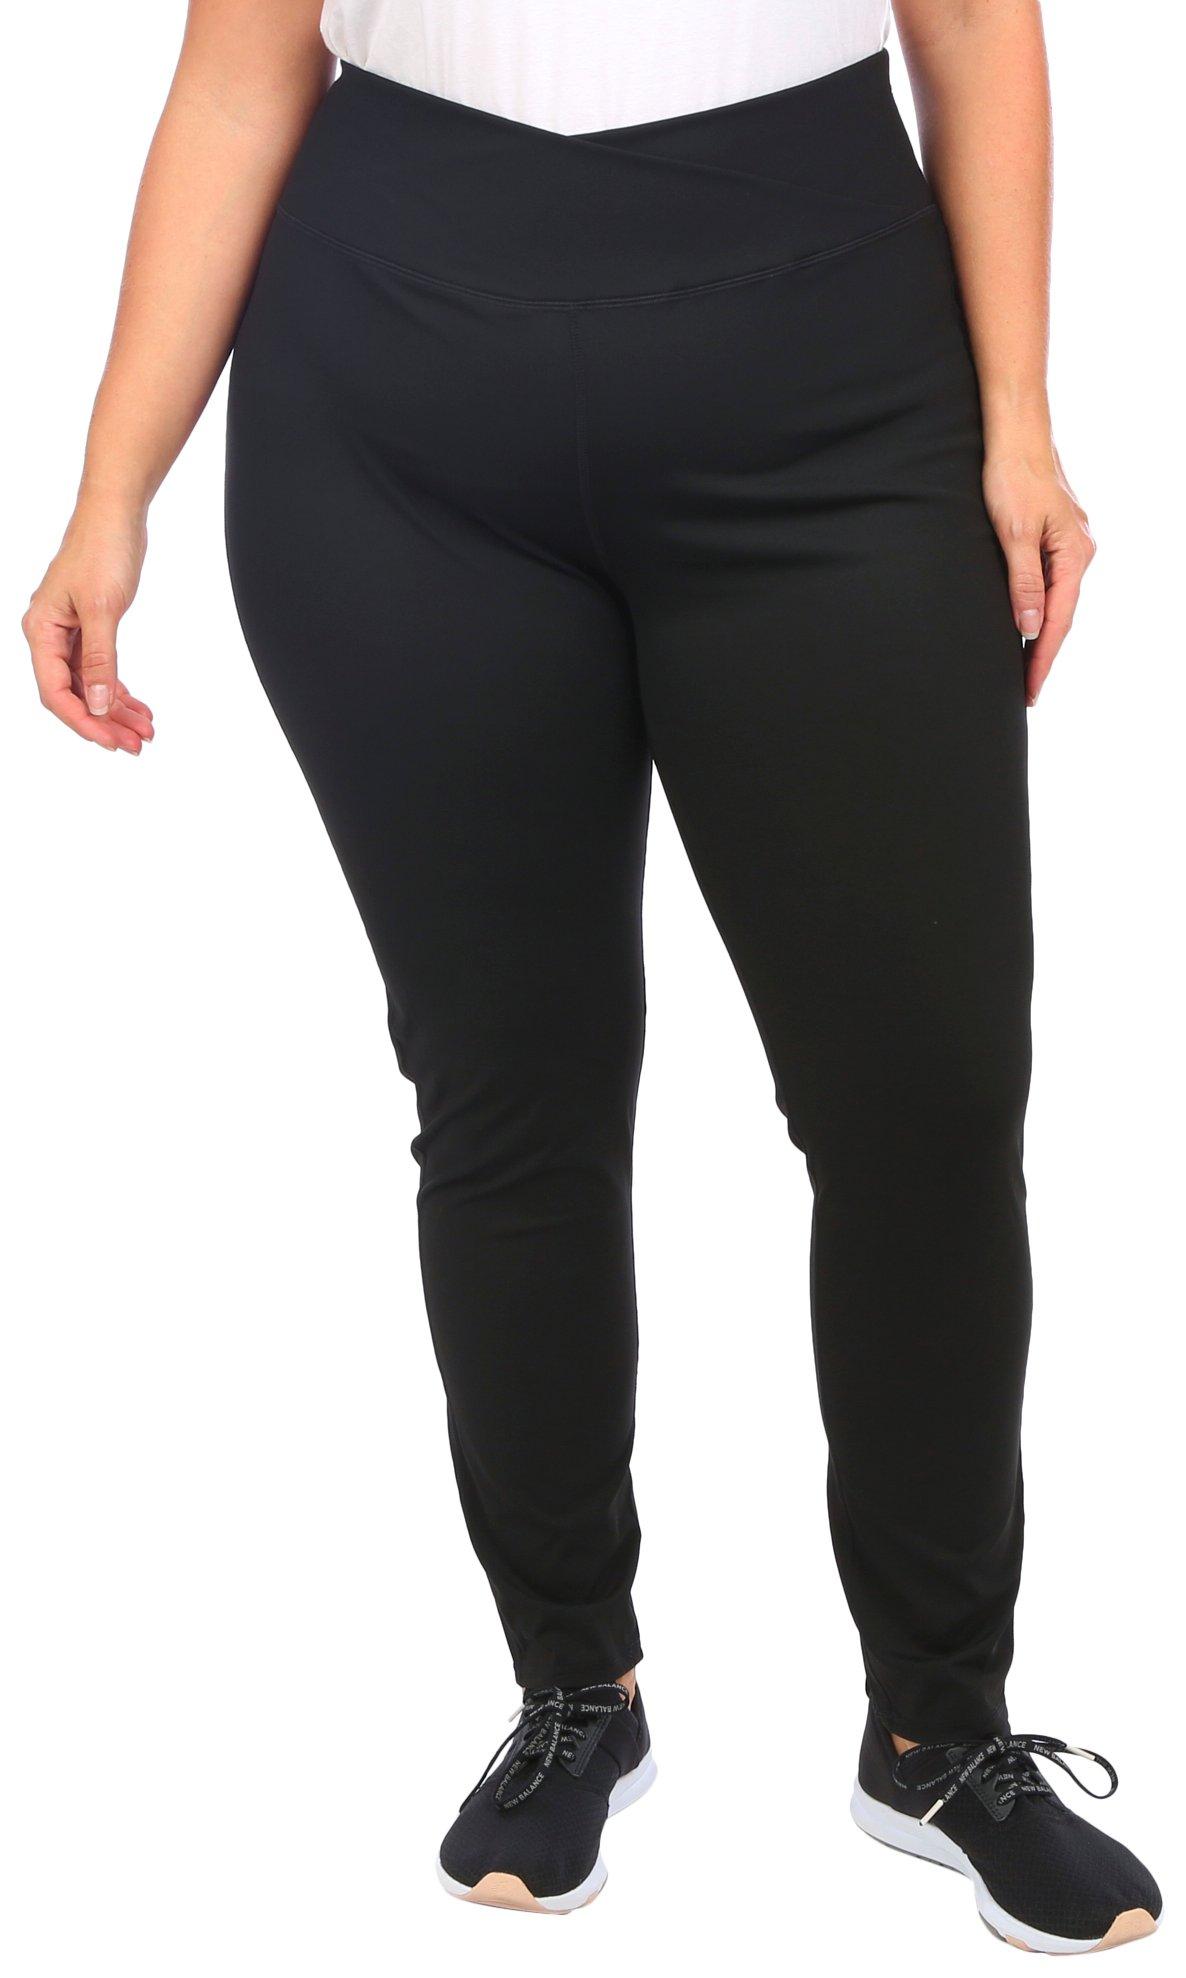 Vogo Athletics Women's leggings Gray/Black Striped Mesh Sides Size Large